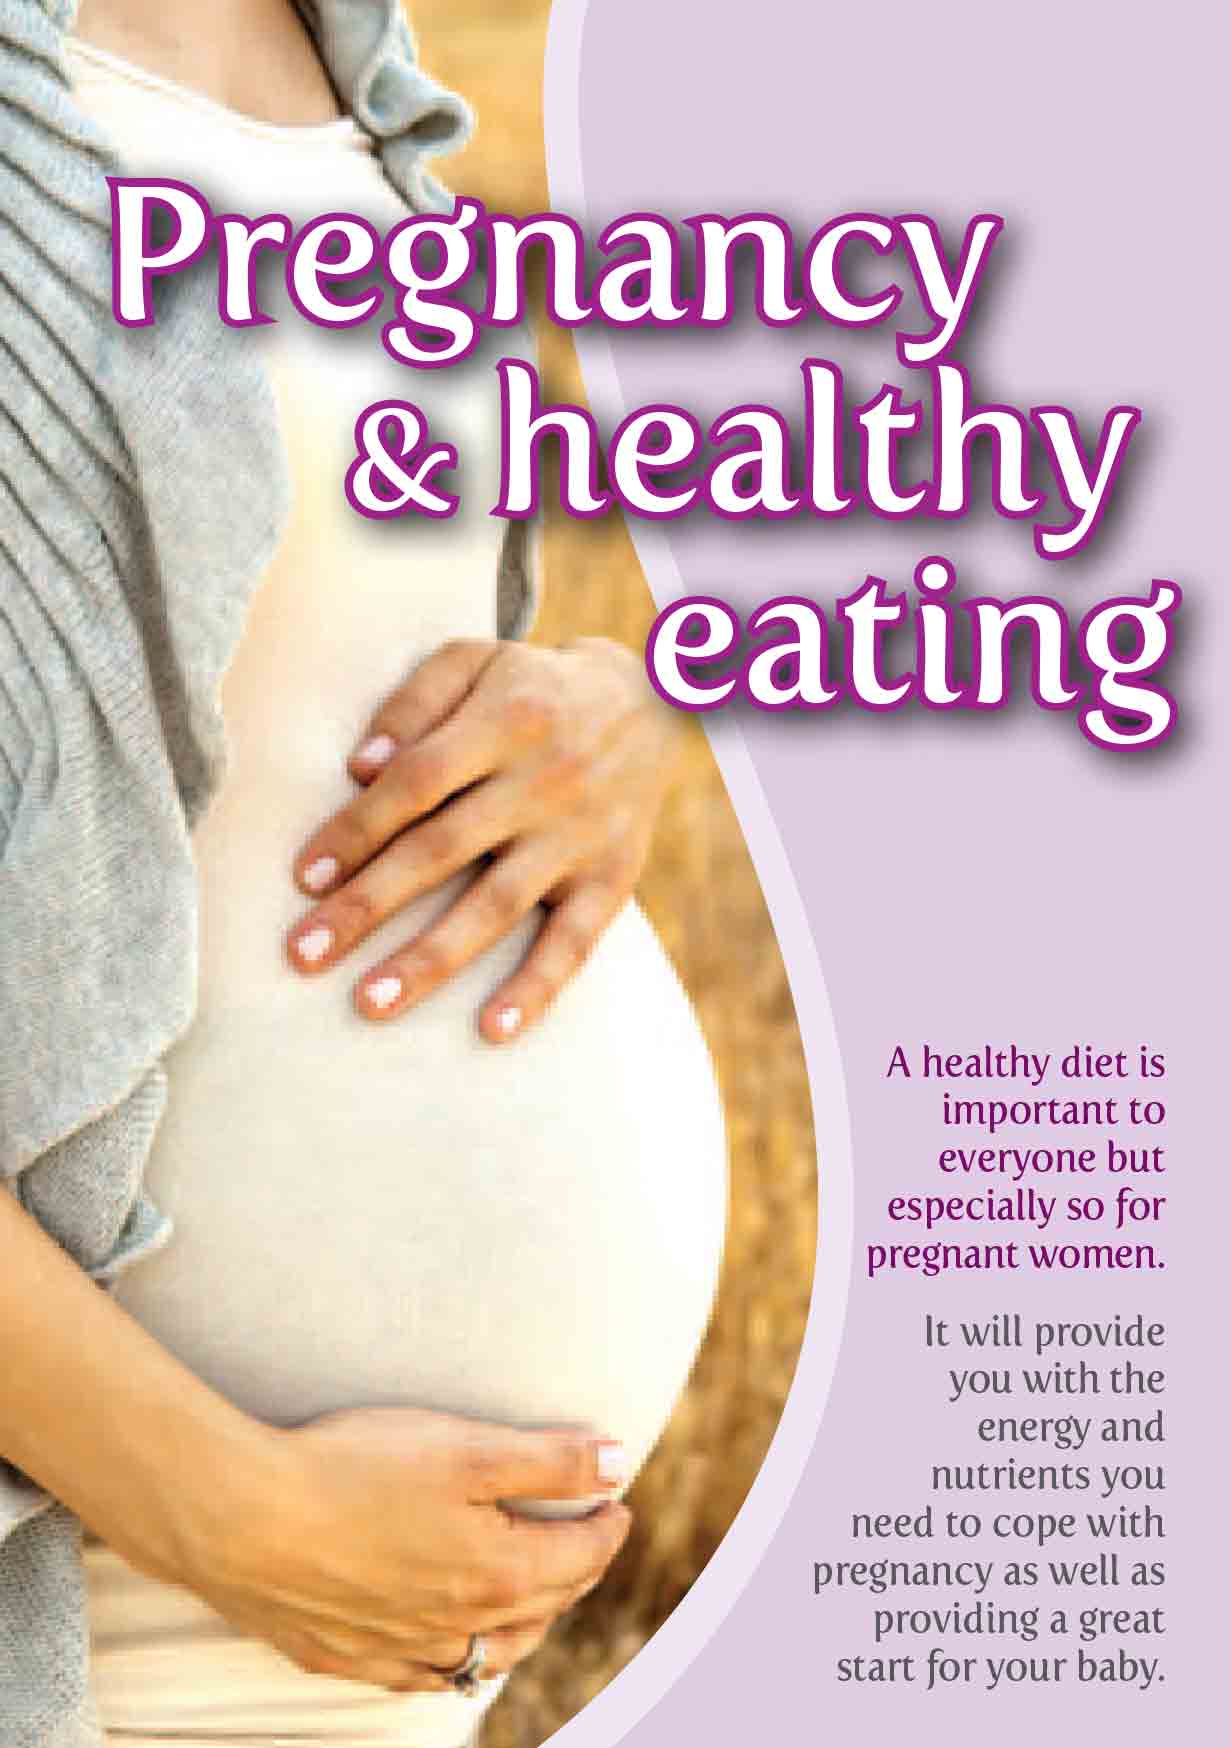 Pregnancy & healthy eating